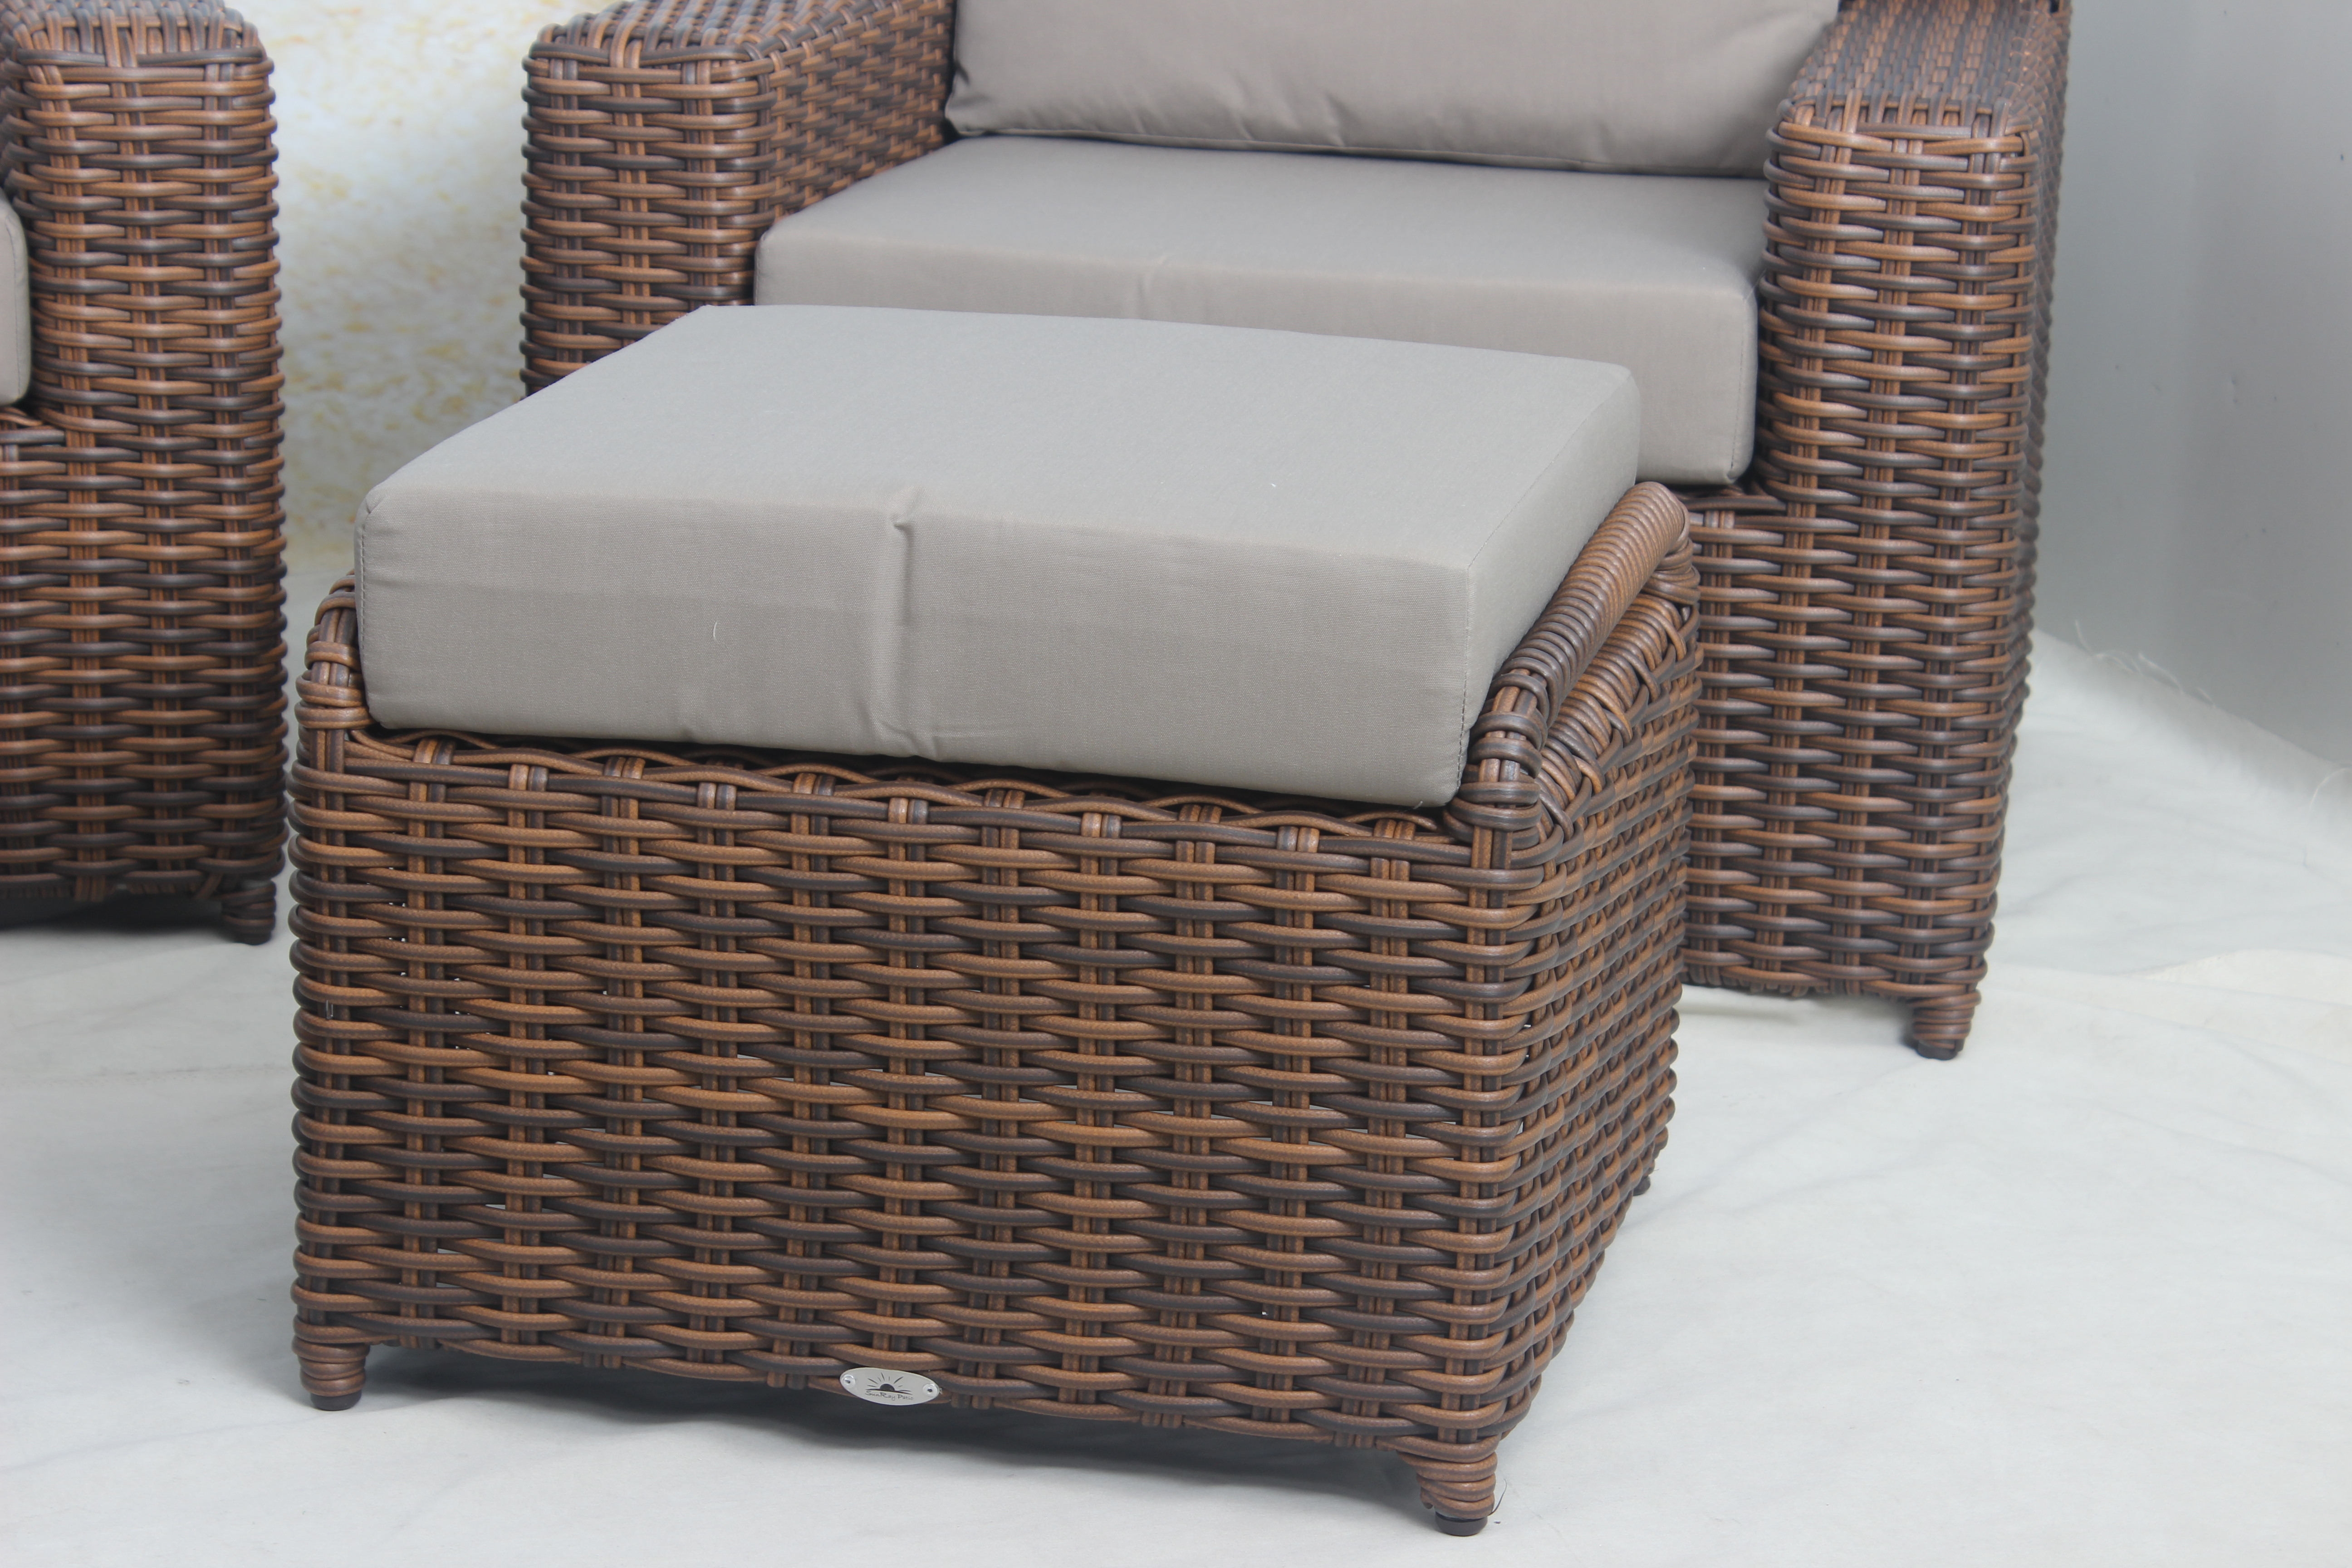 Geflochtenes, braunes, modernes Outdoor-Sofa-Set aus Korbgeflecht